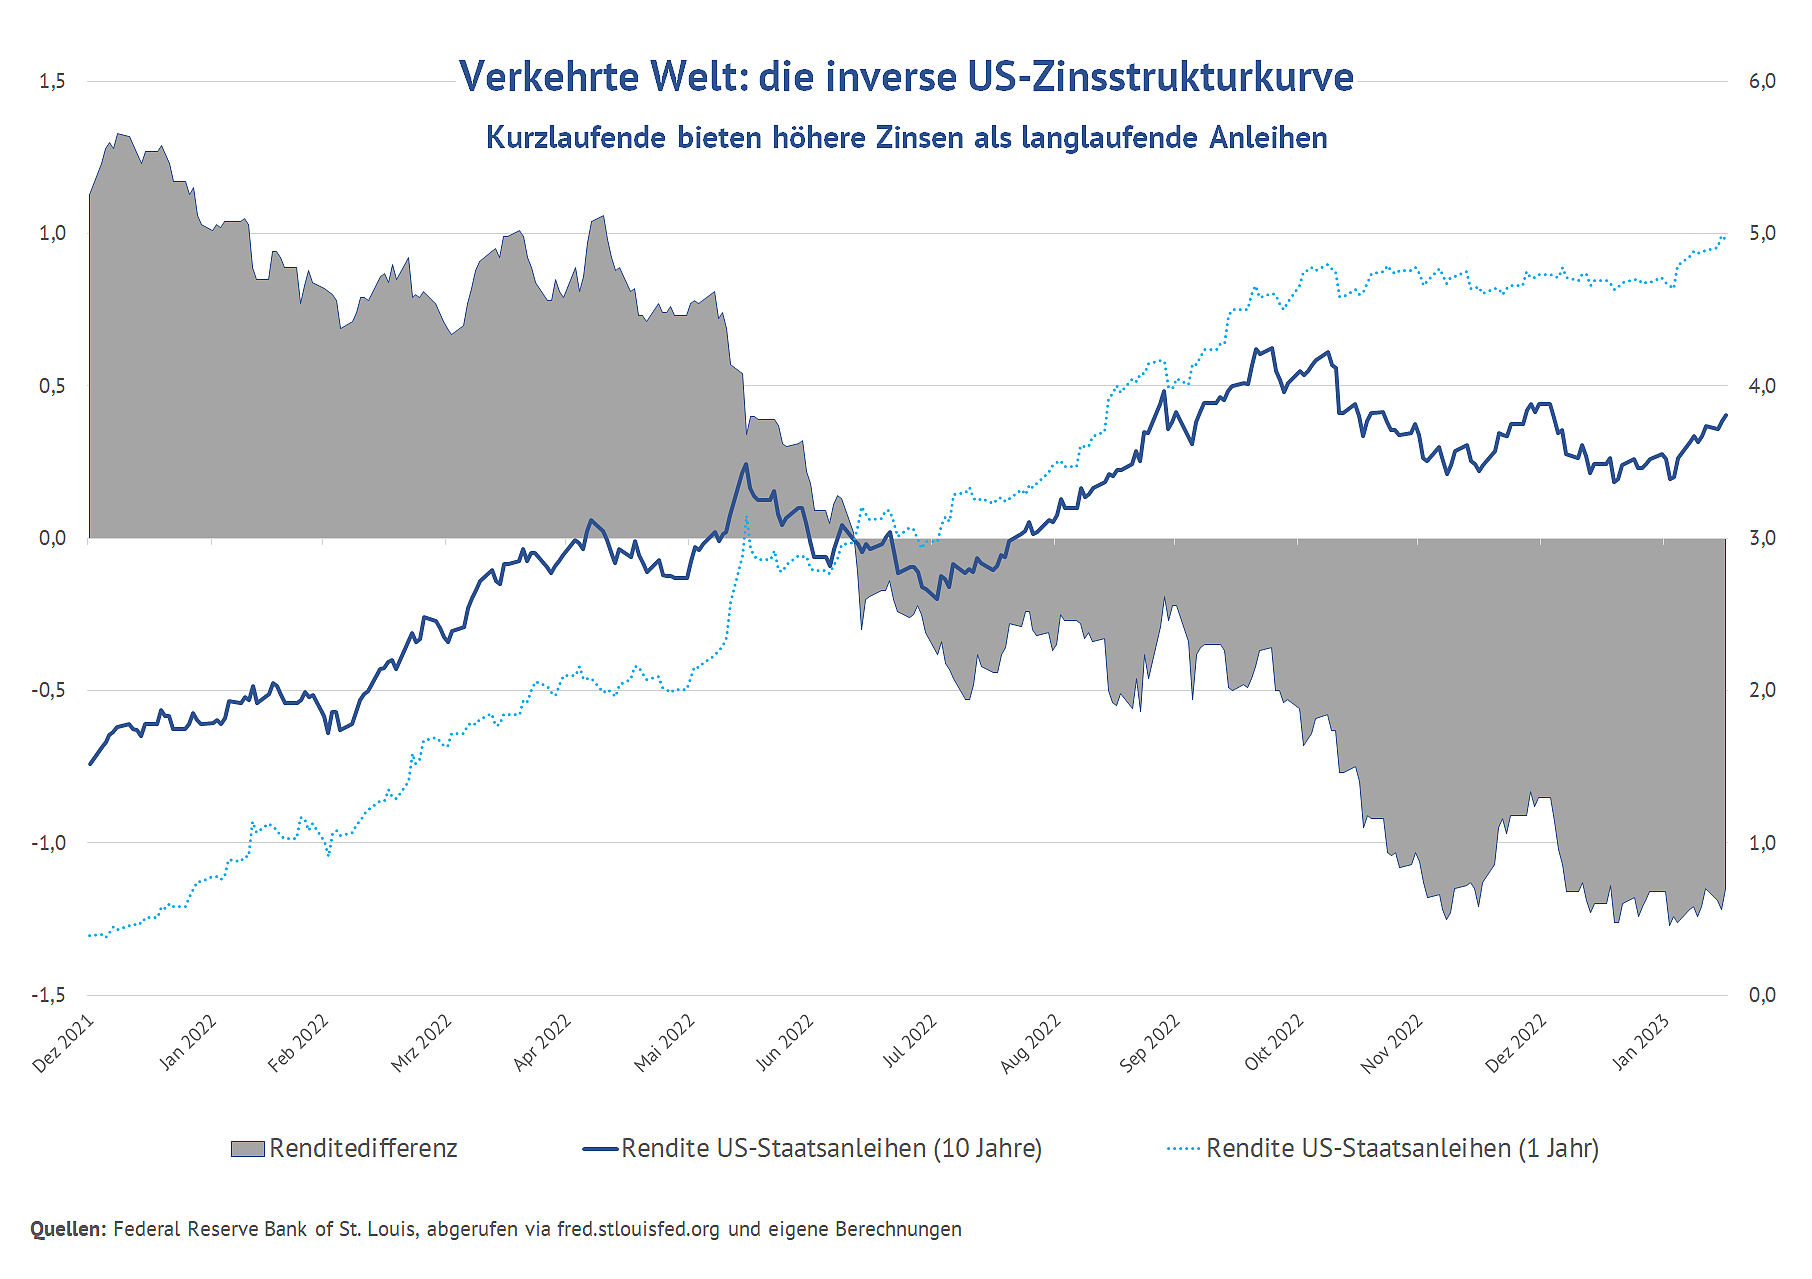 Investment inverse US-Zinsstrukturkurve